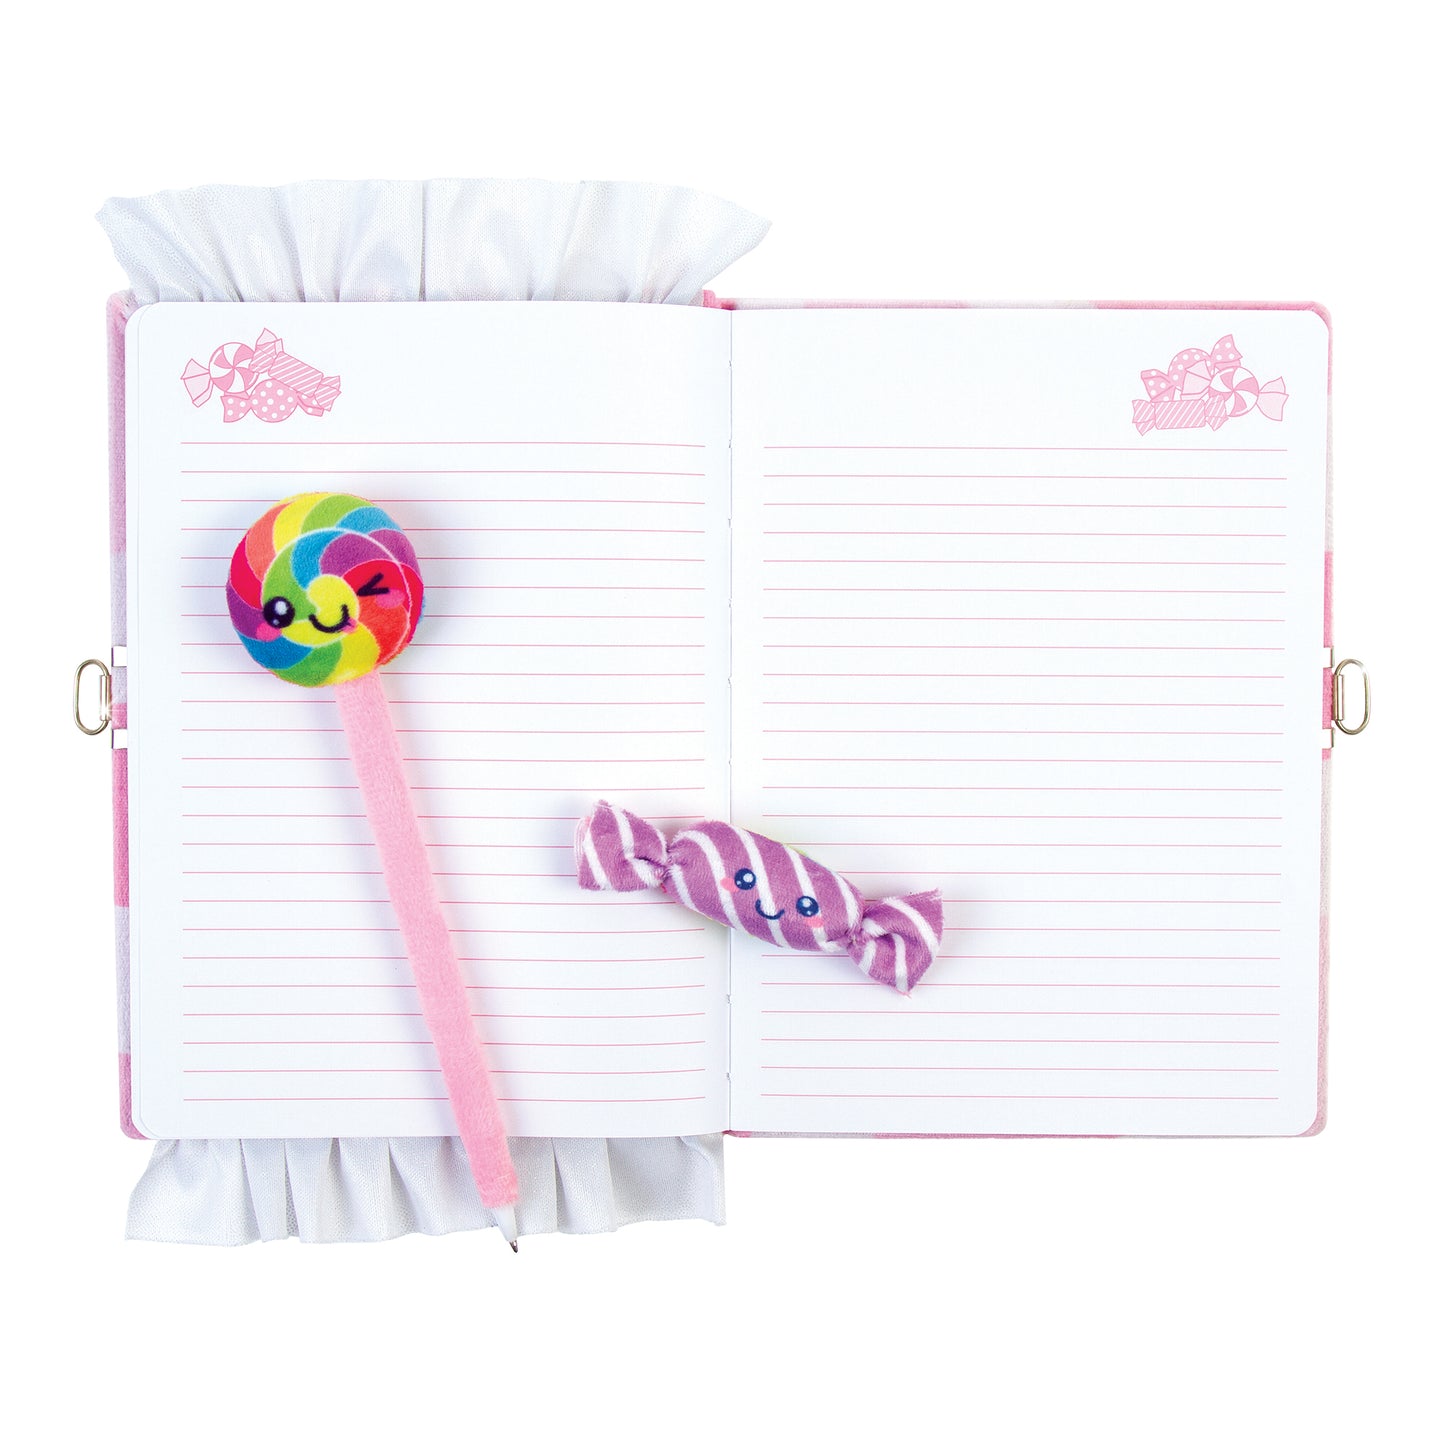 Candy Plush Pocket Locking Journal with Pen